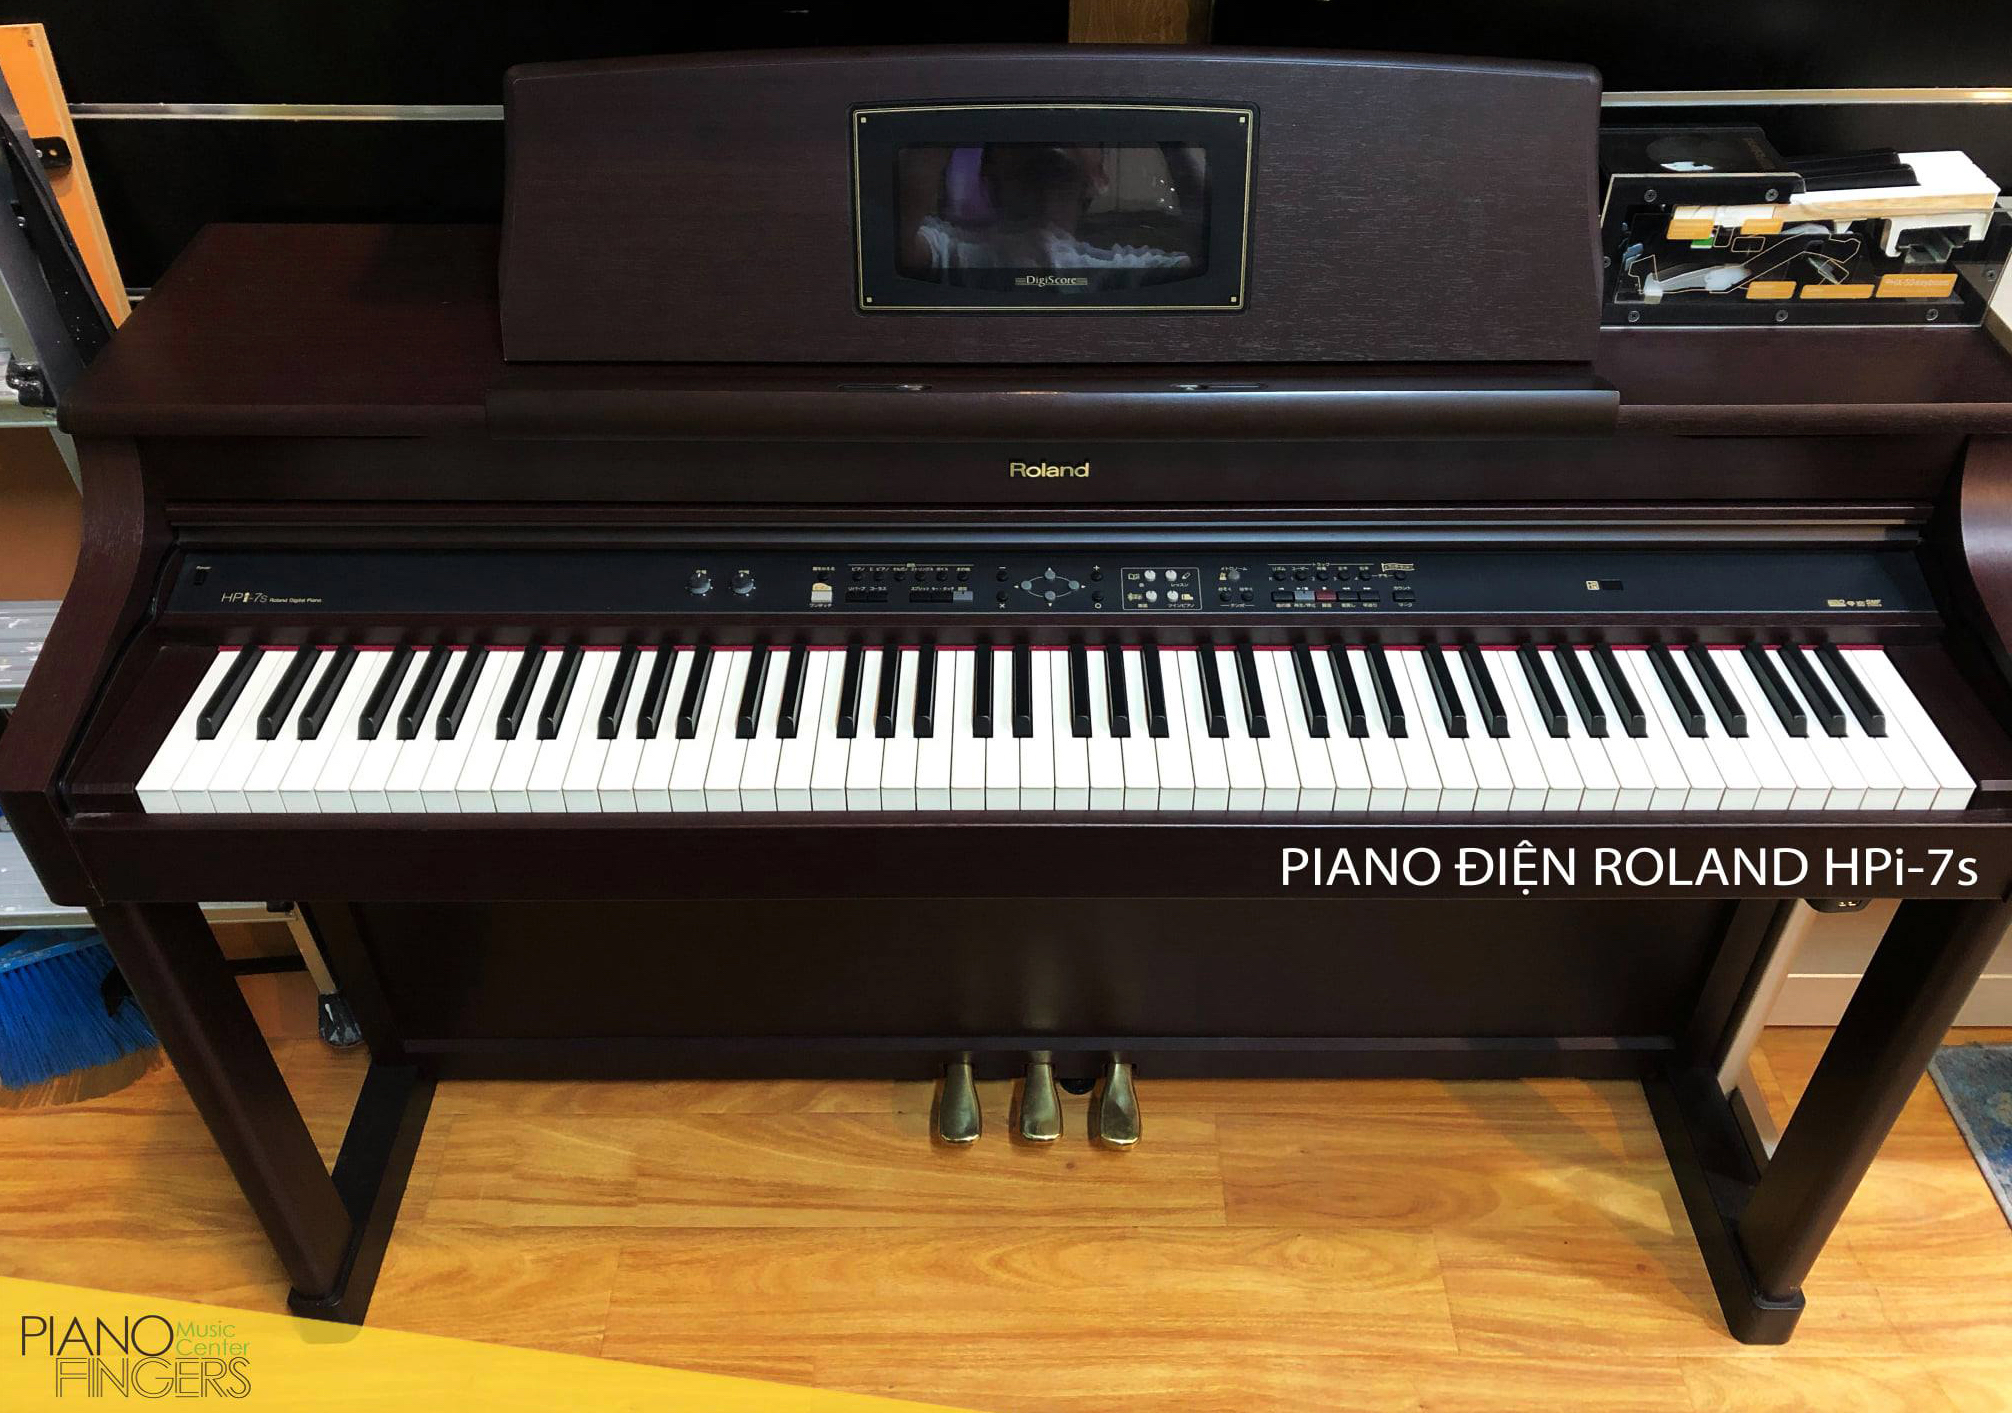 đàn piano điện roland hpi-7s piano fingers 2